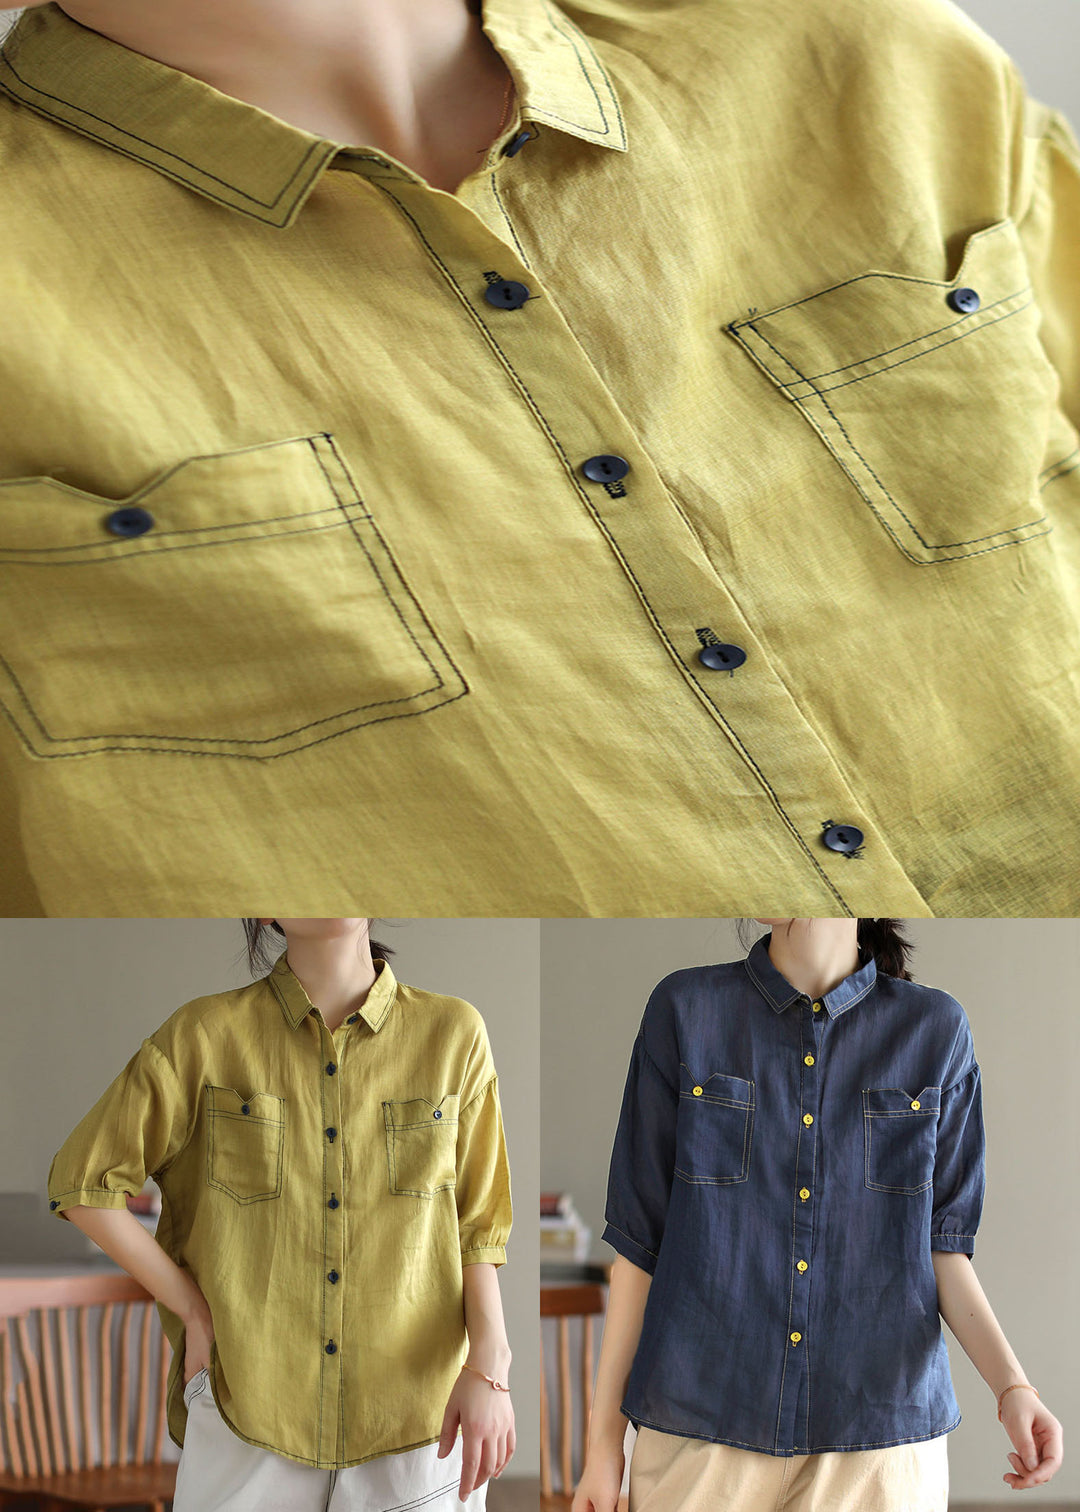 French Yellow Peter Pan Collar Patchwork Cotton Shirt Tops Summer